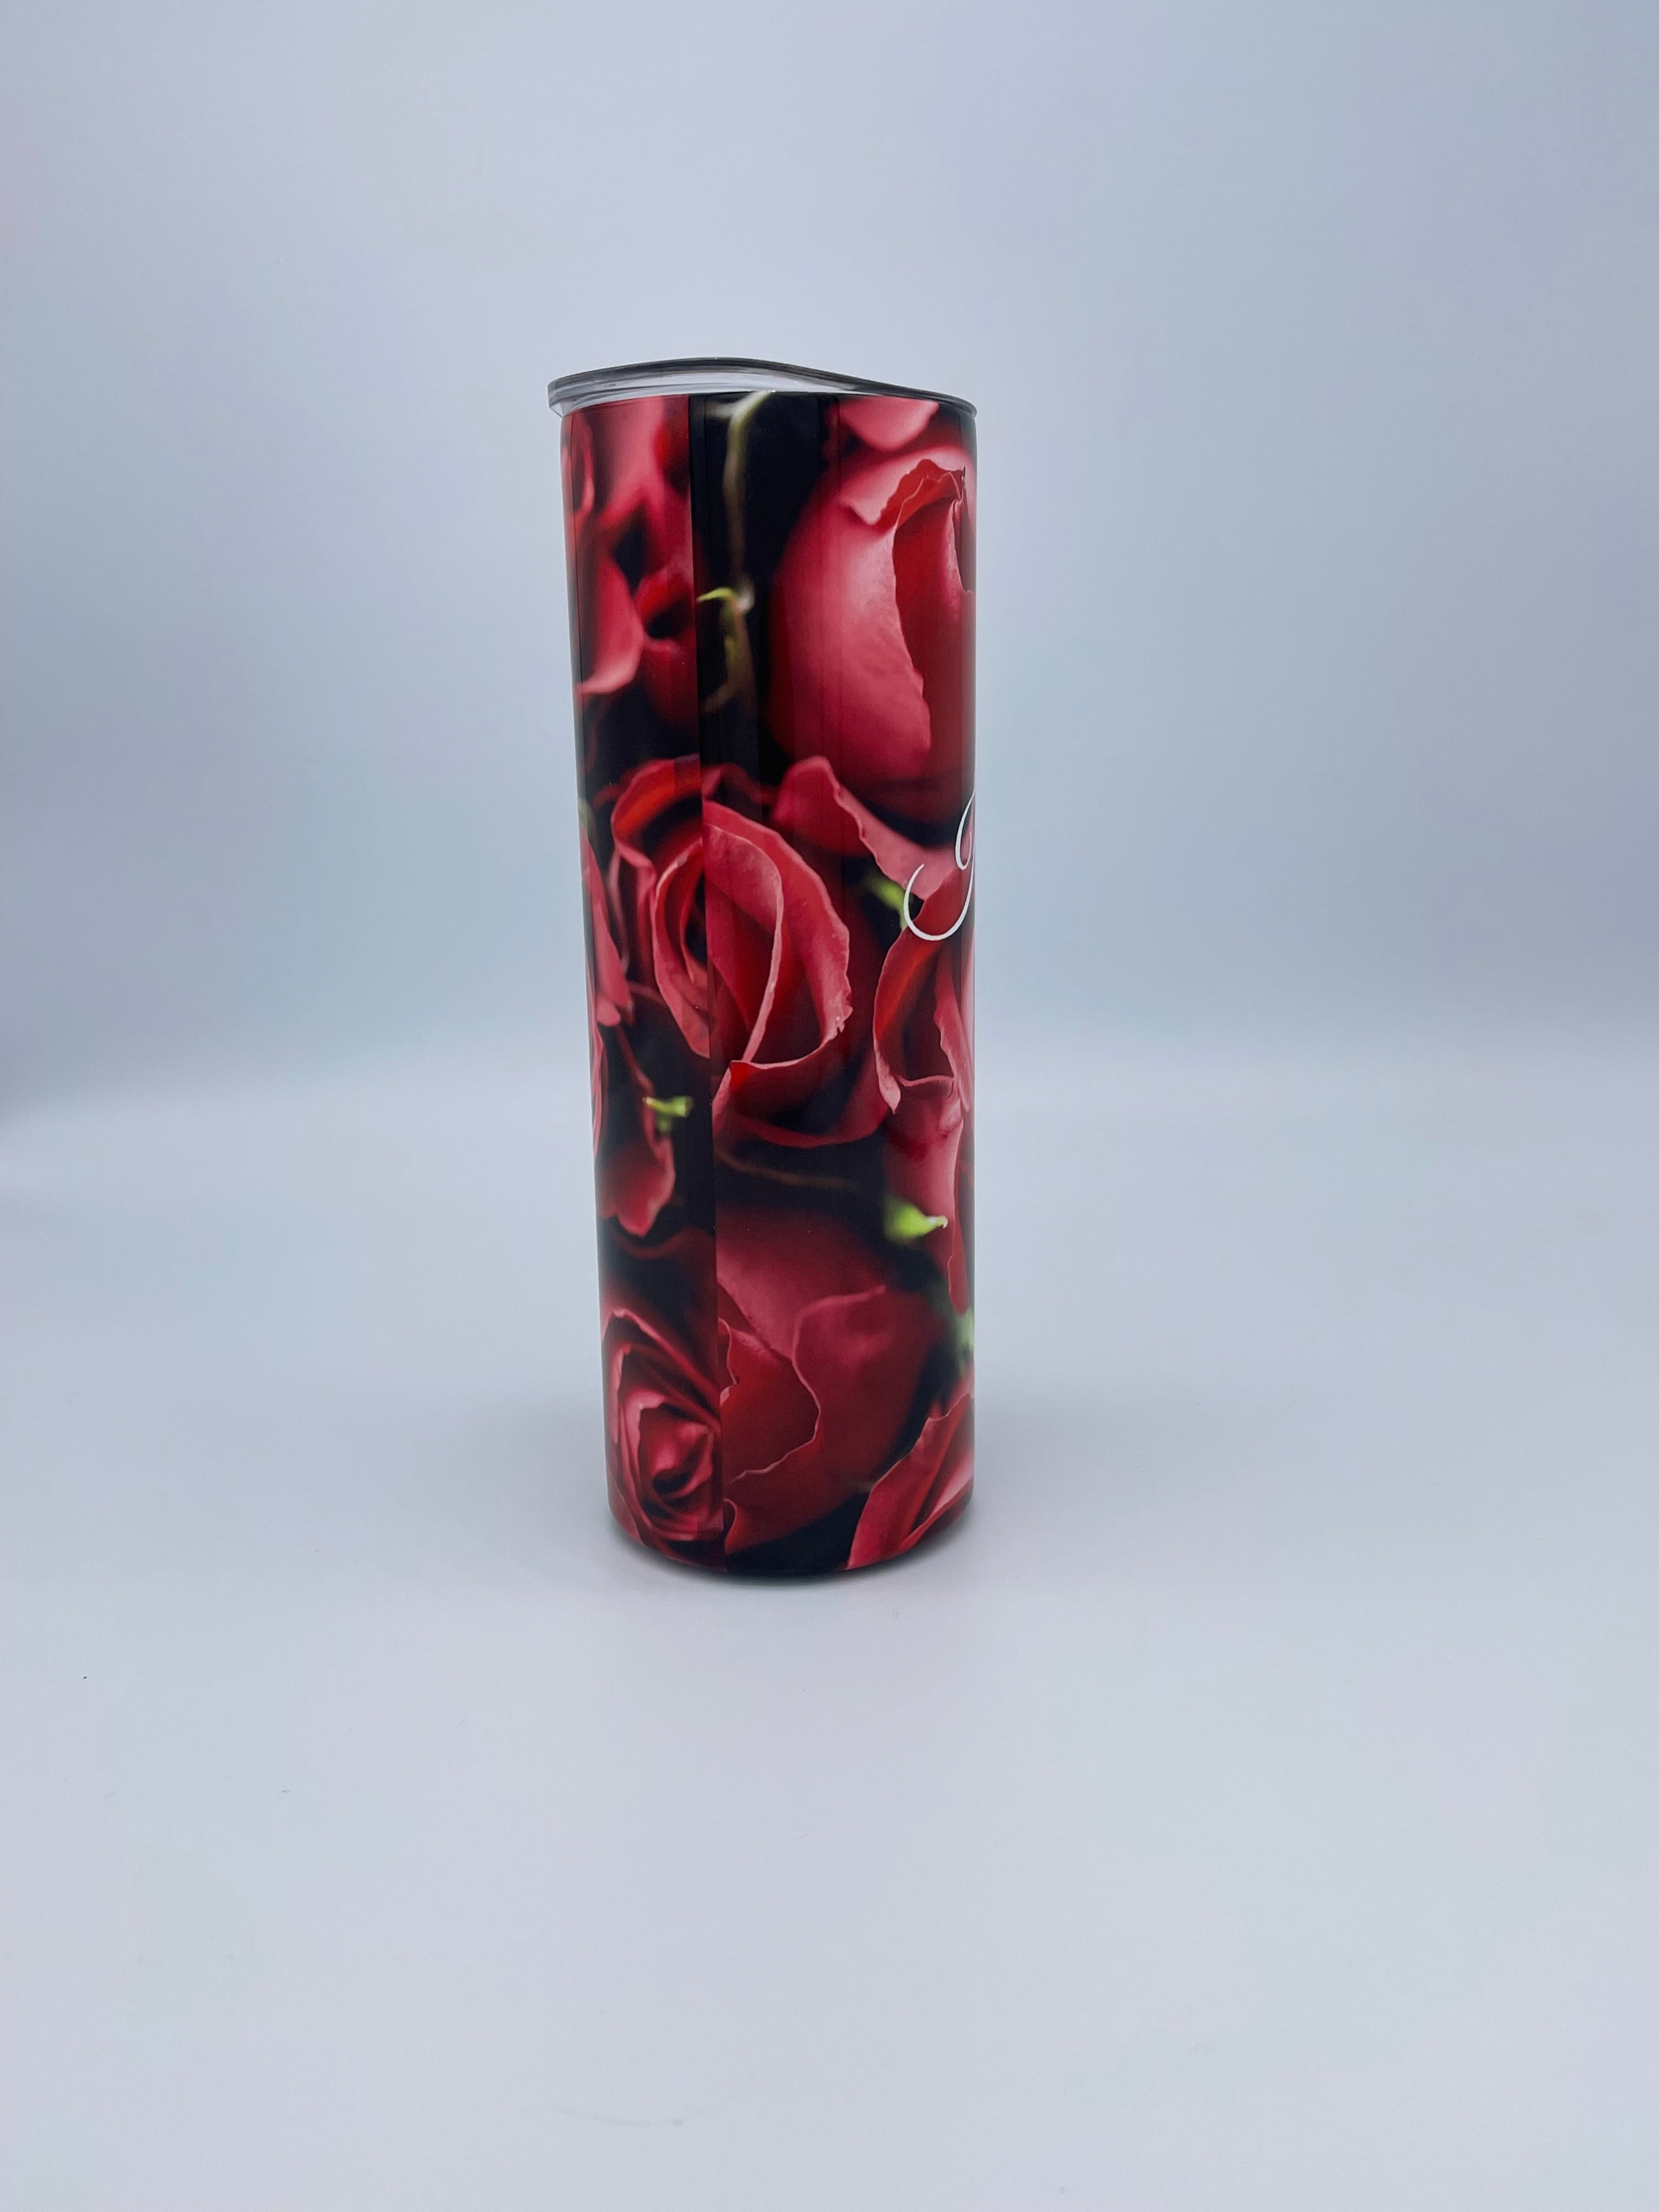 20 oz Travel Mug - I Love You with Roses Wrap